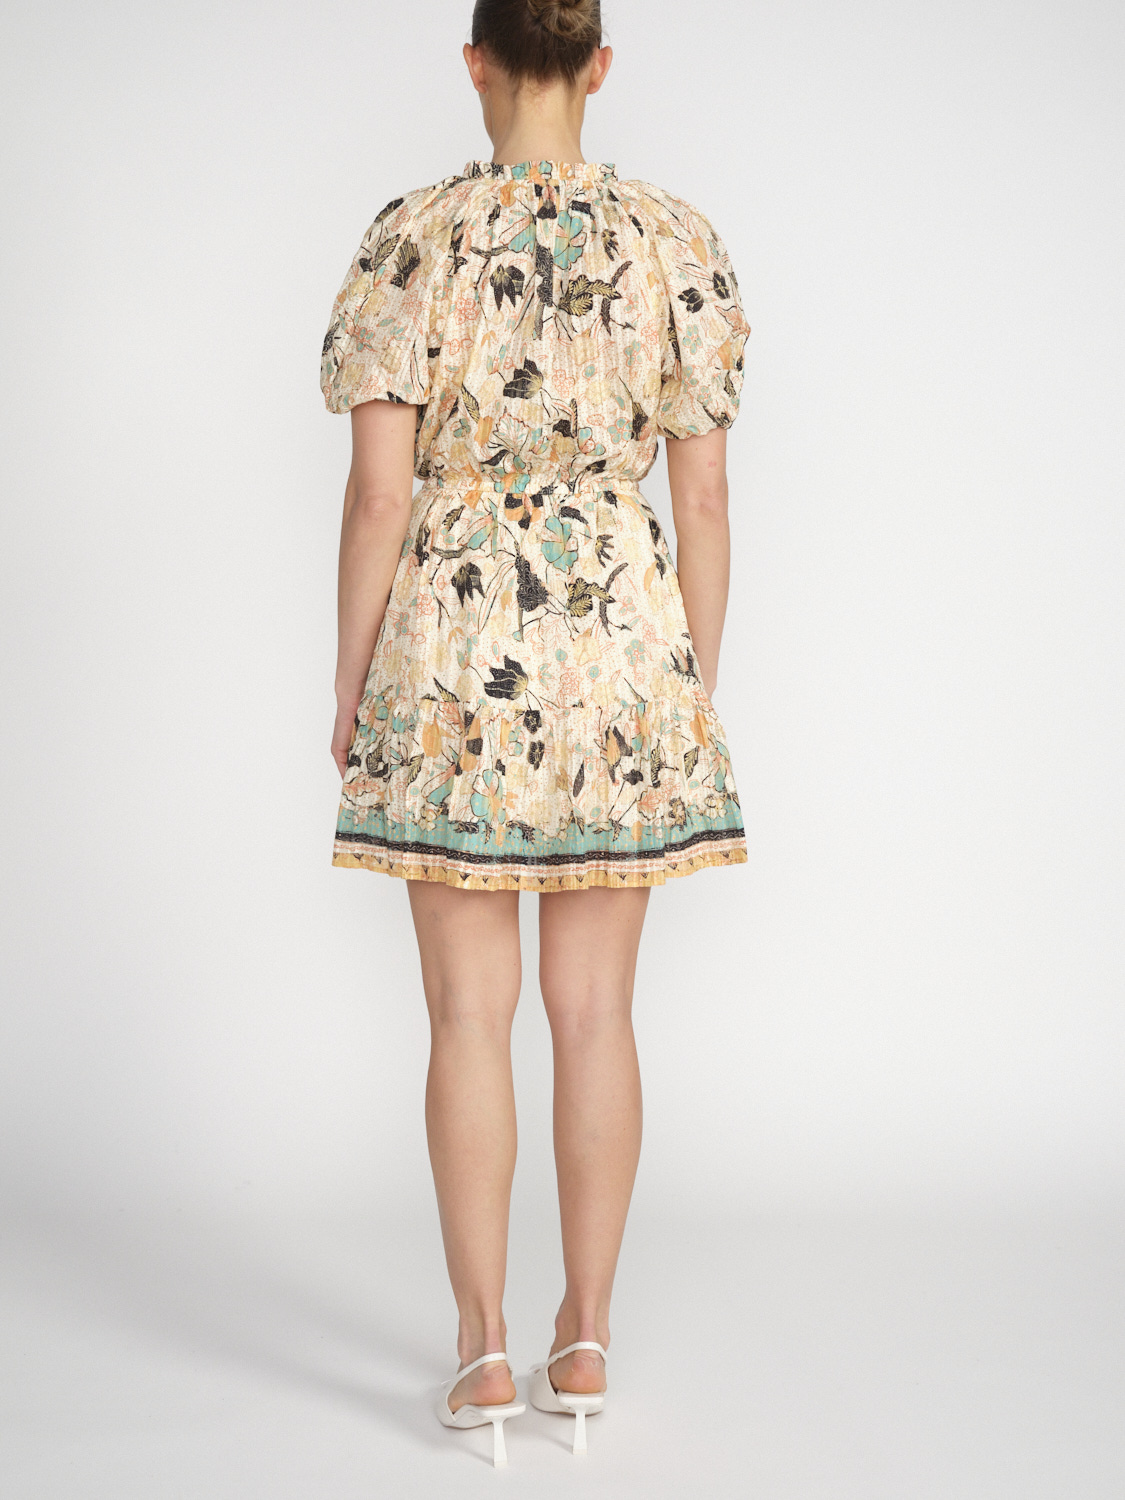 Ulla Johnson Sanna – Lightweight dress with a floral design  creme 36